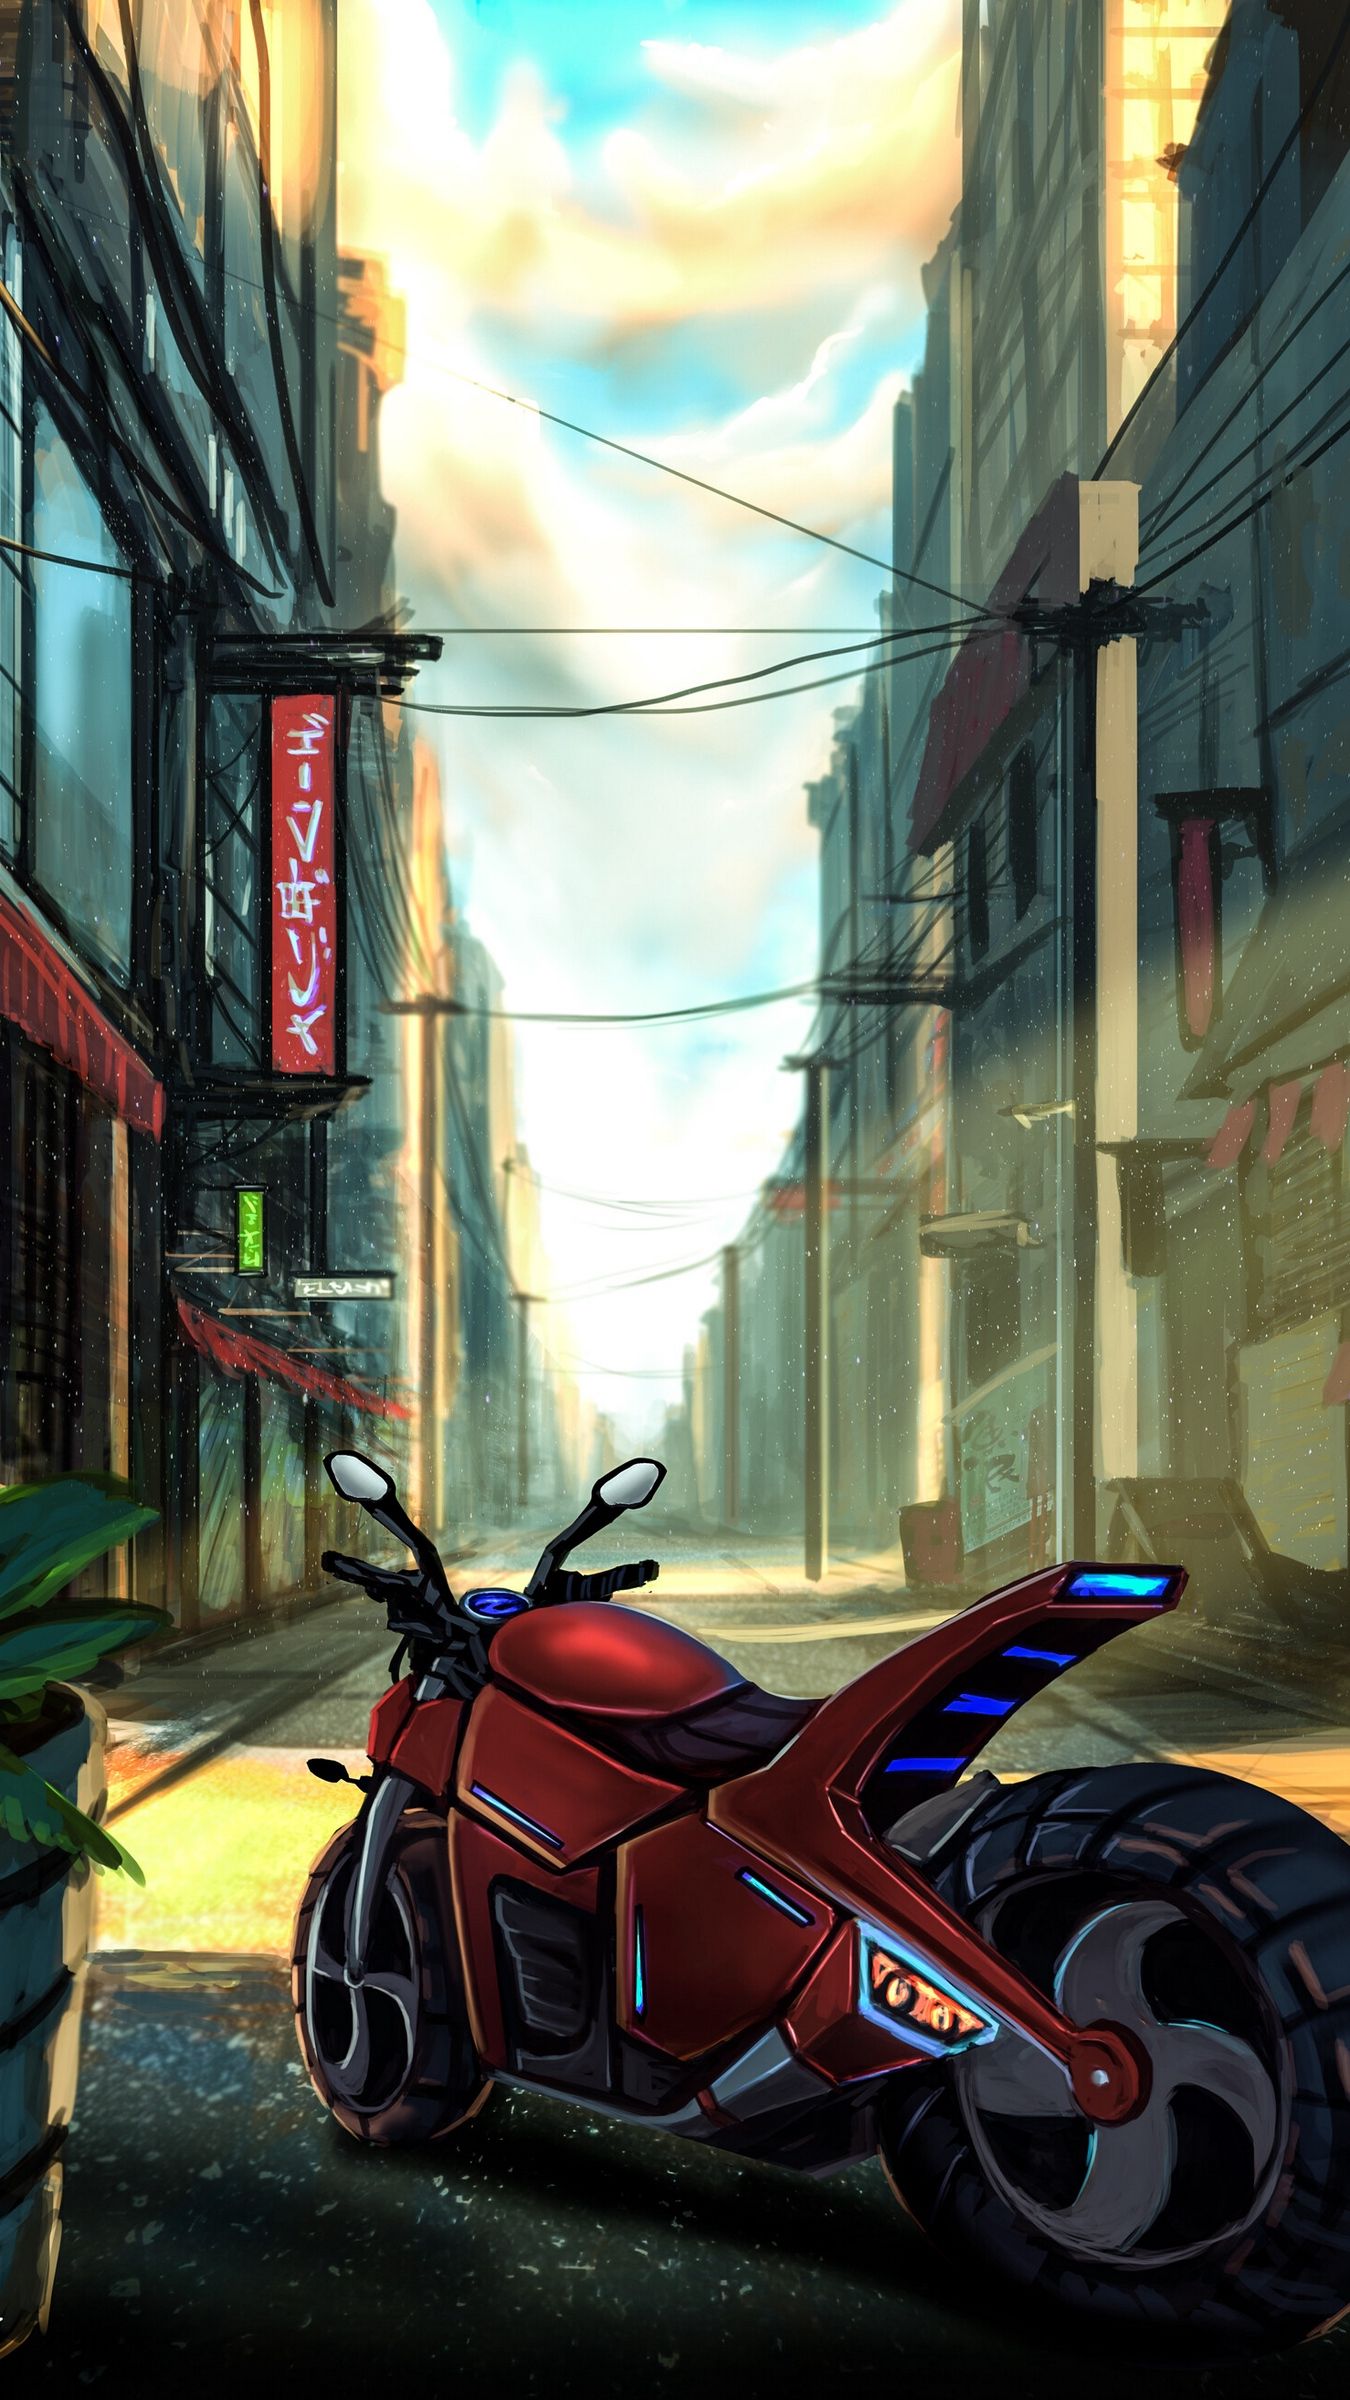 Download wallpaper 1350x2400 motorcycle, bike, street, city, art